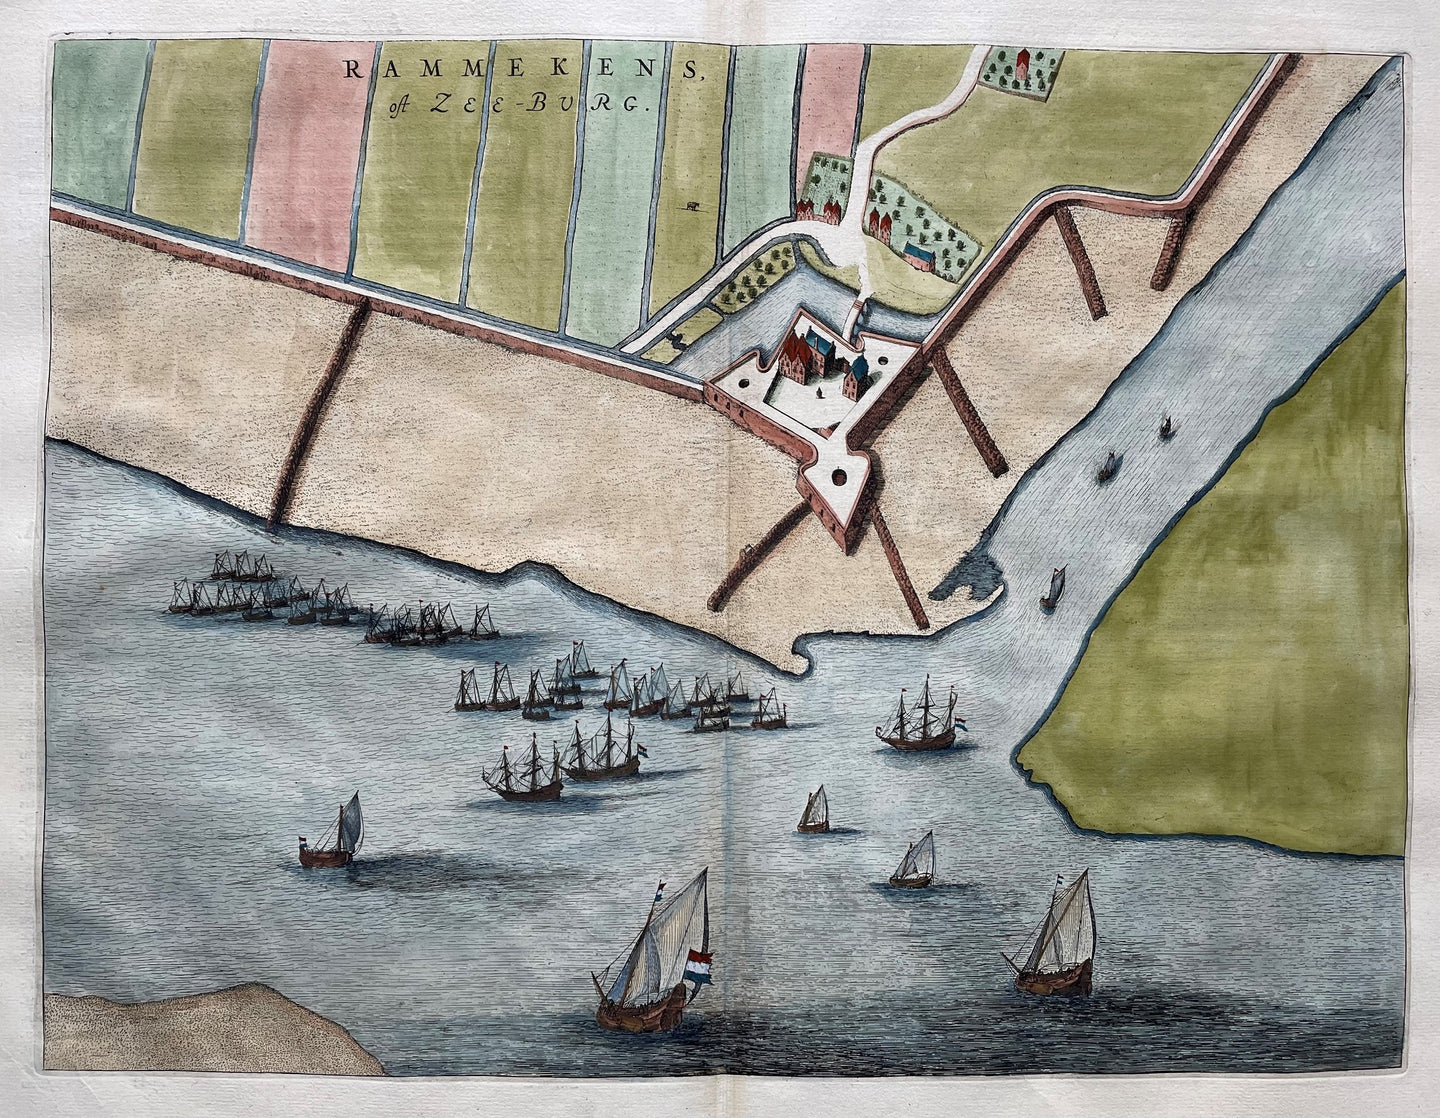 Ritthem Fort Rammekens - J Blaeu - 1649